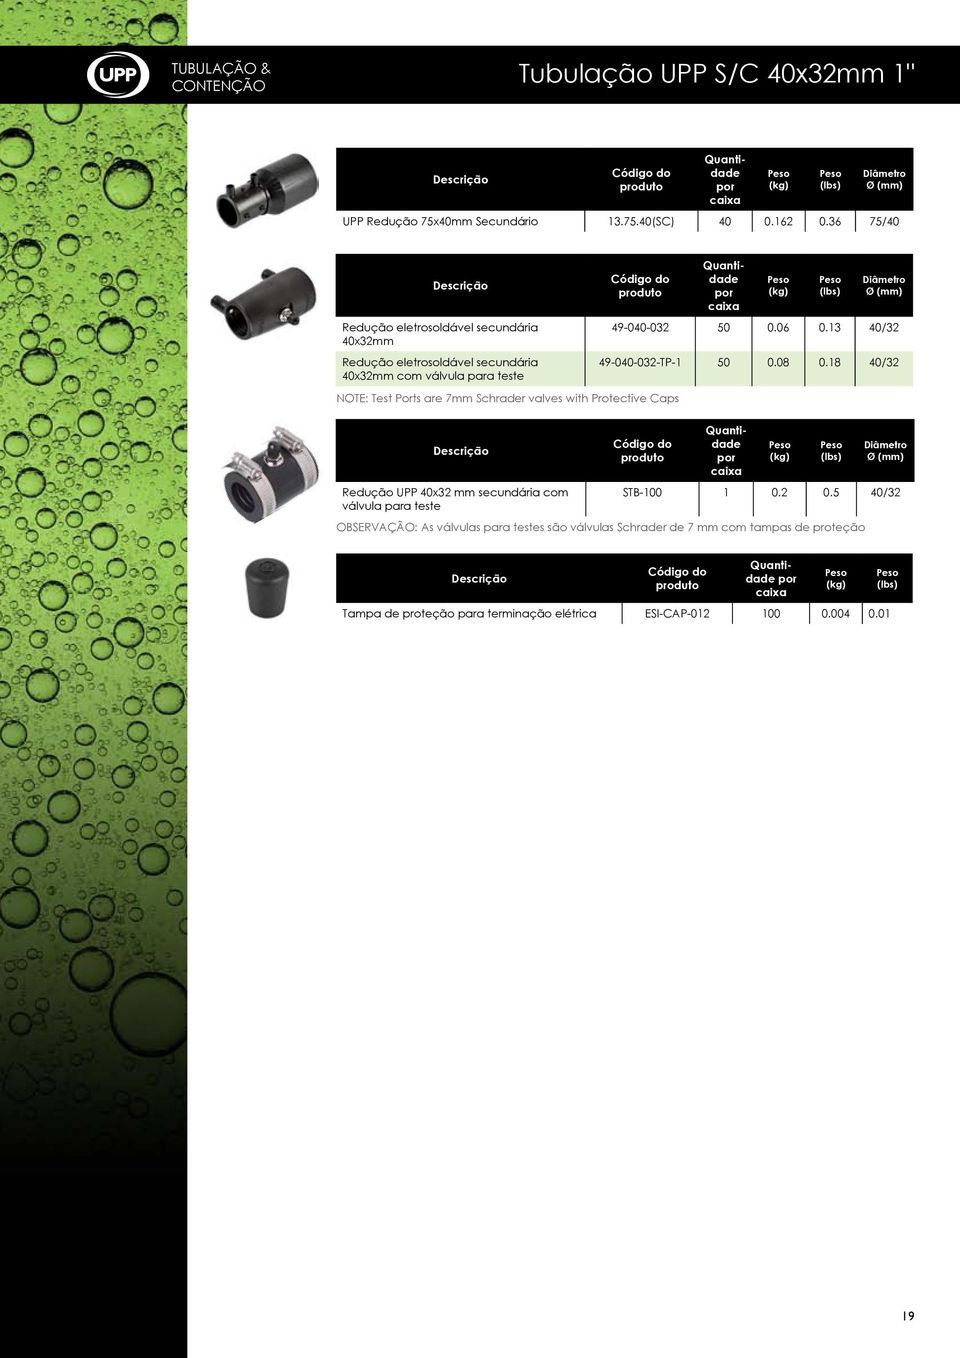 com válvula para teste NOTE: Test Ports are 7mm Schrader valves with Protective Caps 49-040-032 50 0.06 0.13 40/32 49-040-032-TP-1 50 0.08 0.